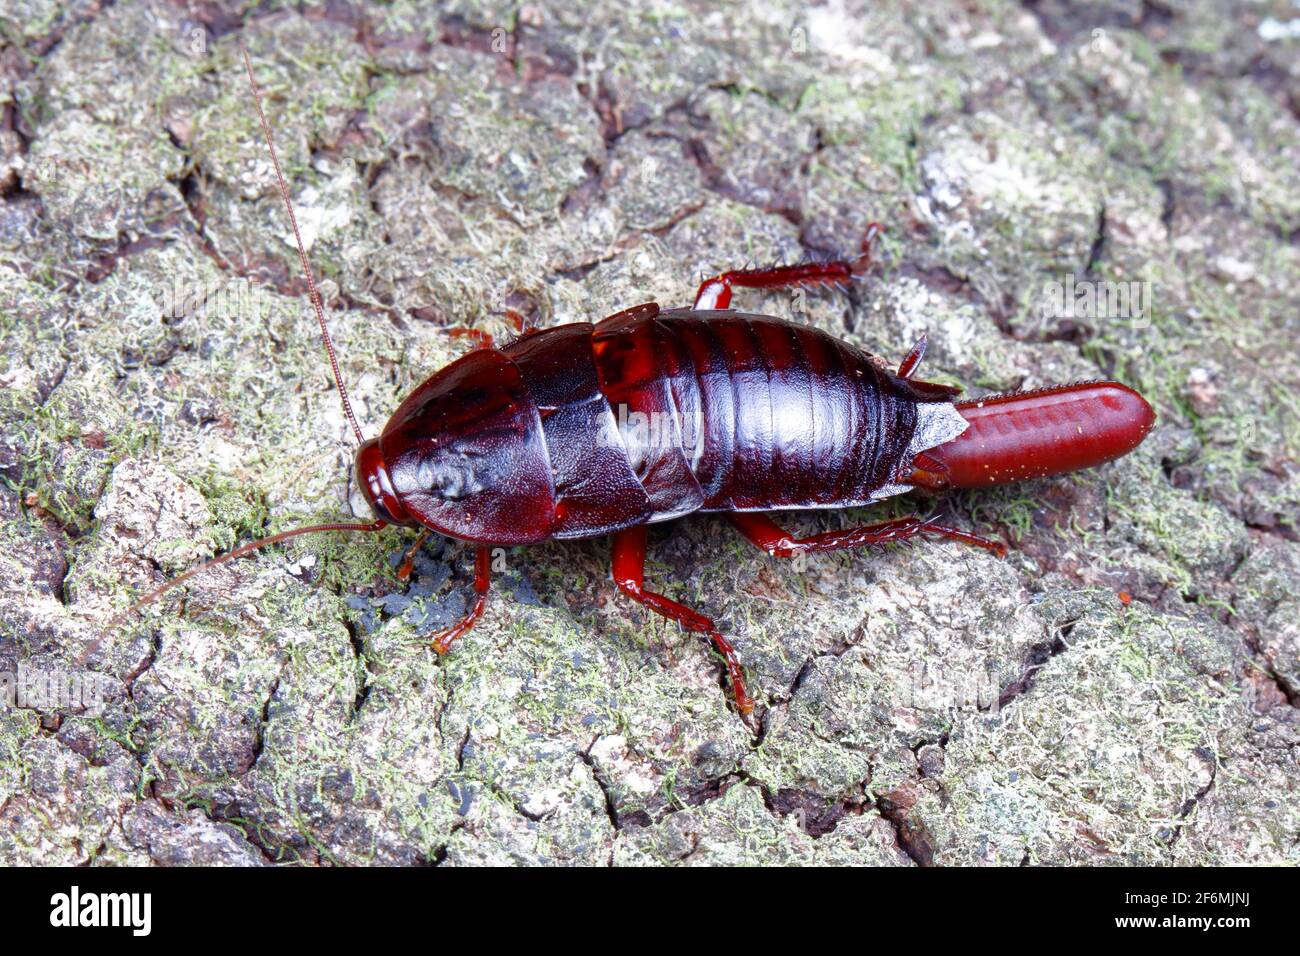 Florida Woods Cockroach or palmetto bug, Eurycotis floridana, on a tree trunk with an egg sac. Stock Photo